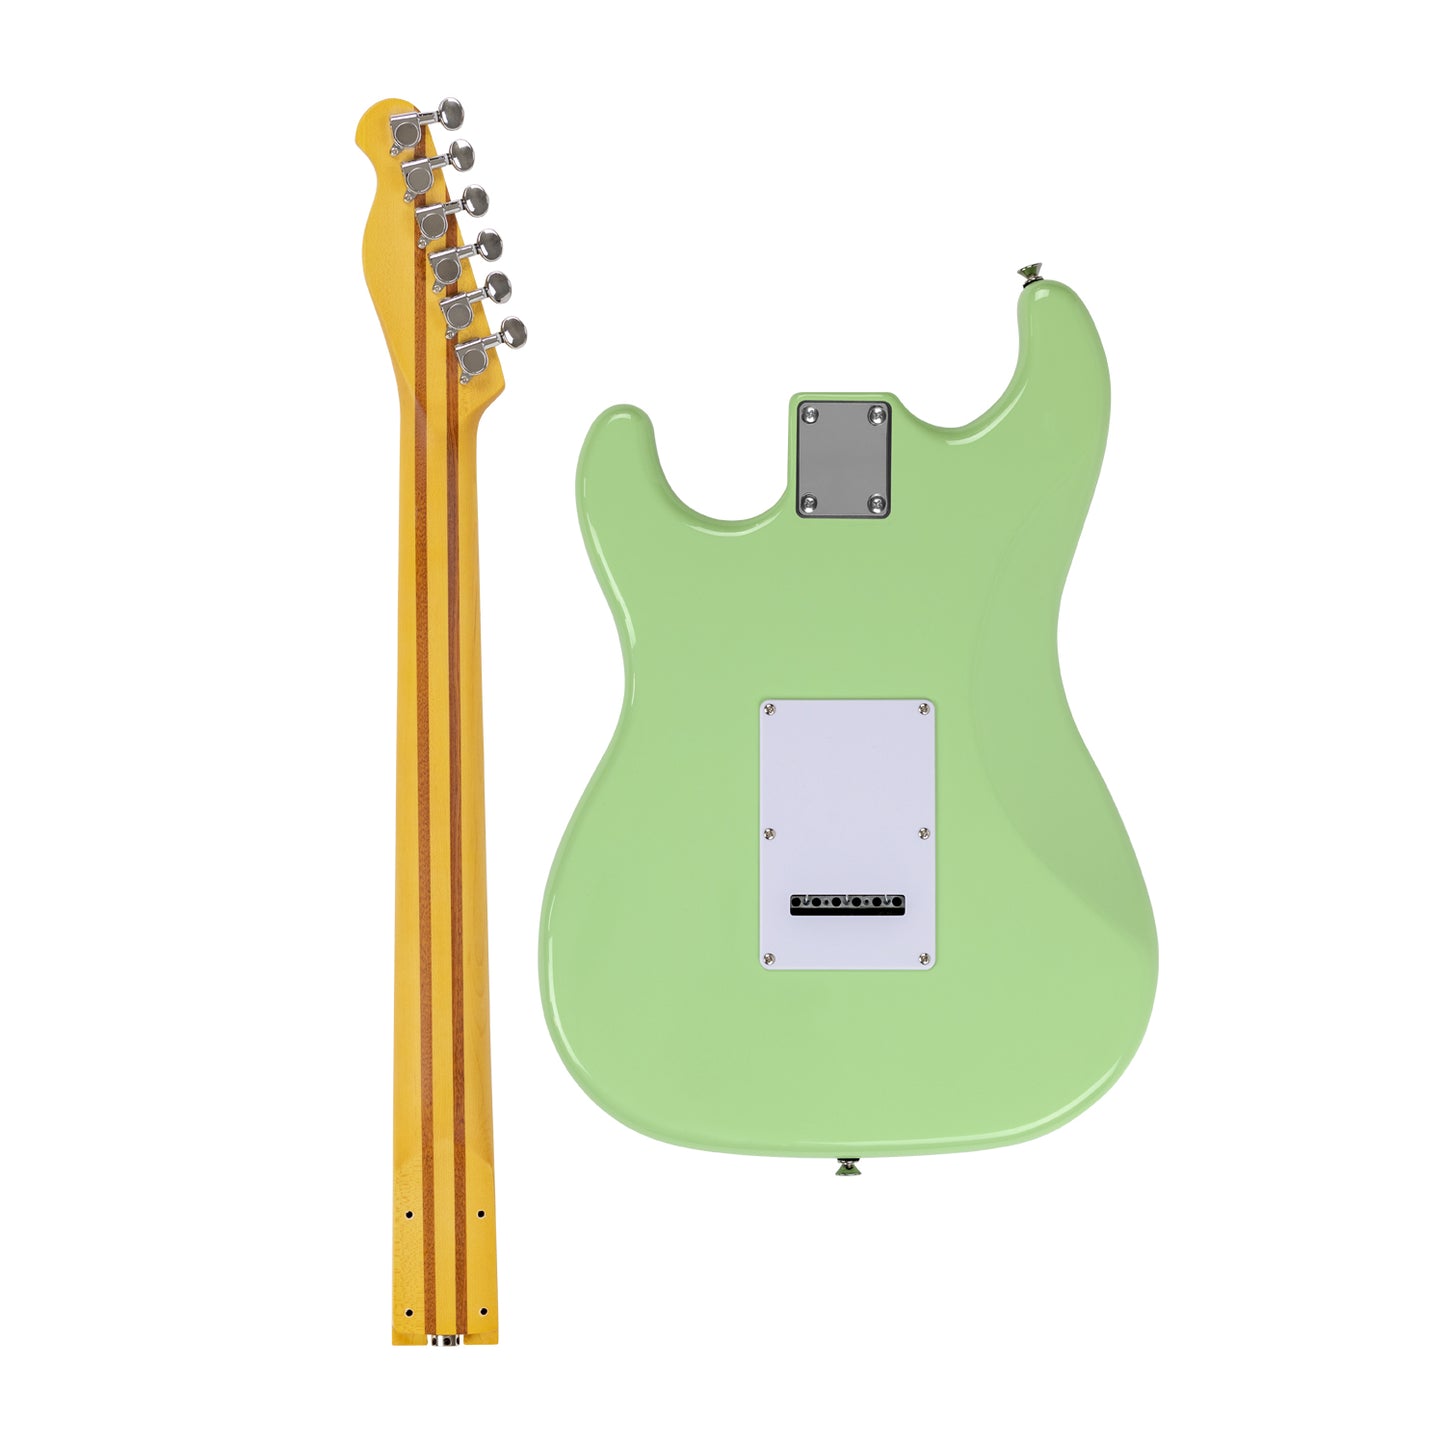 AE Guitars® Build Series Sepulveda Standard Seafoam Green (Maple Neck) Guitar Kit